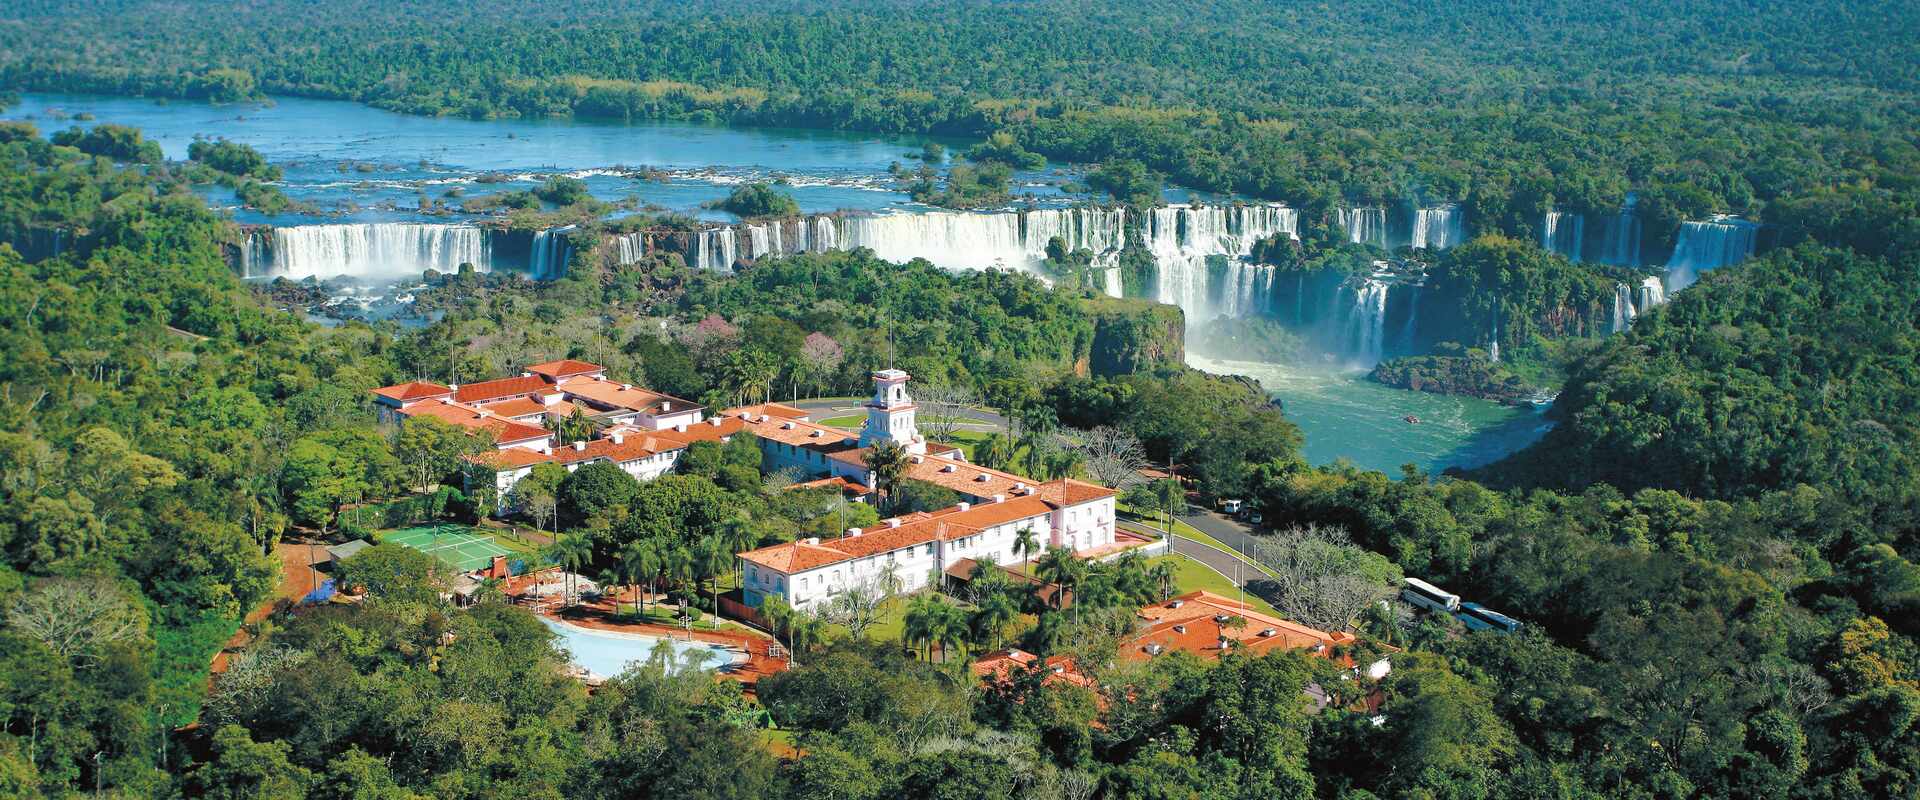 panorama belmond hotel das cataratas iguazu falls, brazil